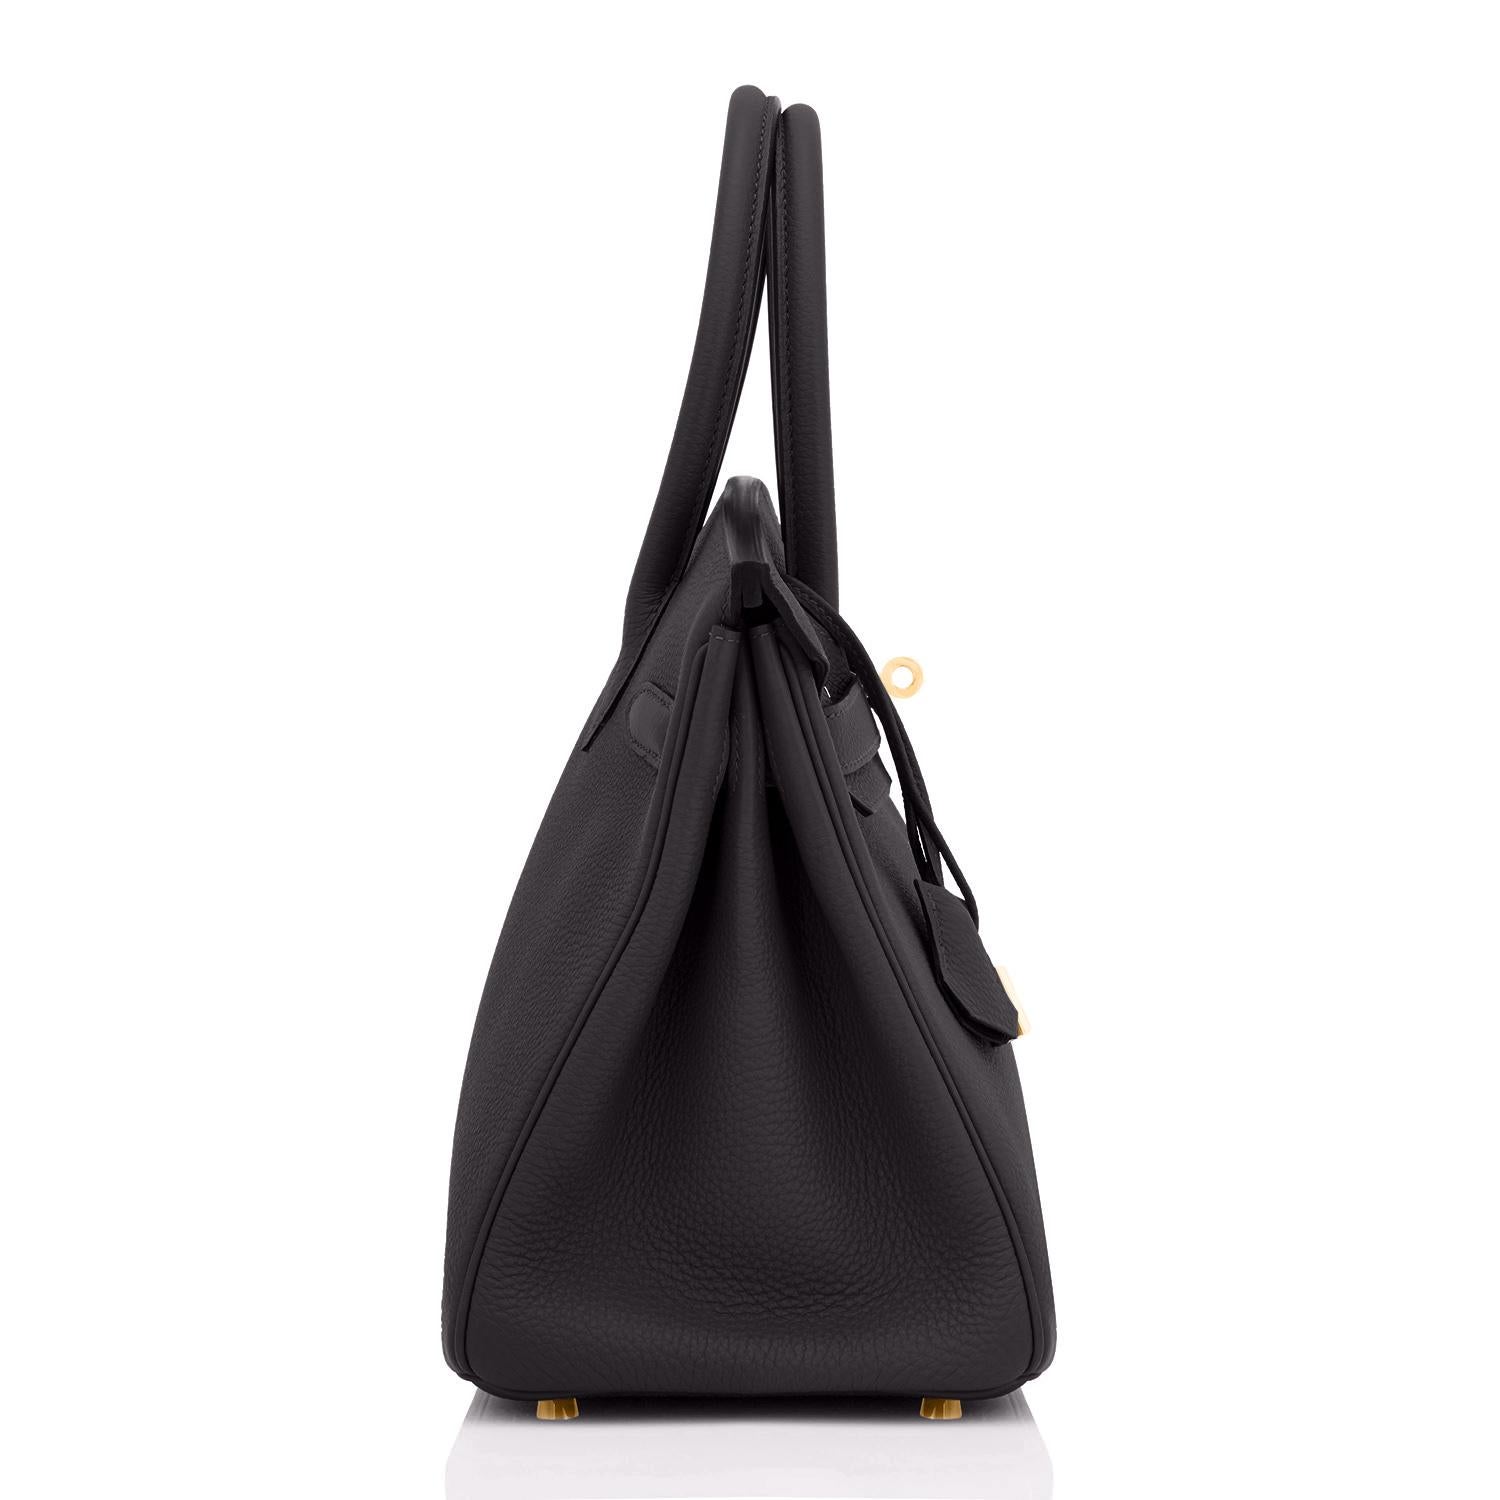 Hermes Birkin 30cm Black Togo Gold Hardware Bag  In New Condition For Sale In New York, NY